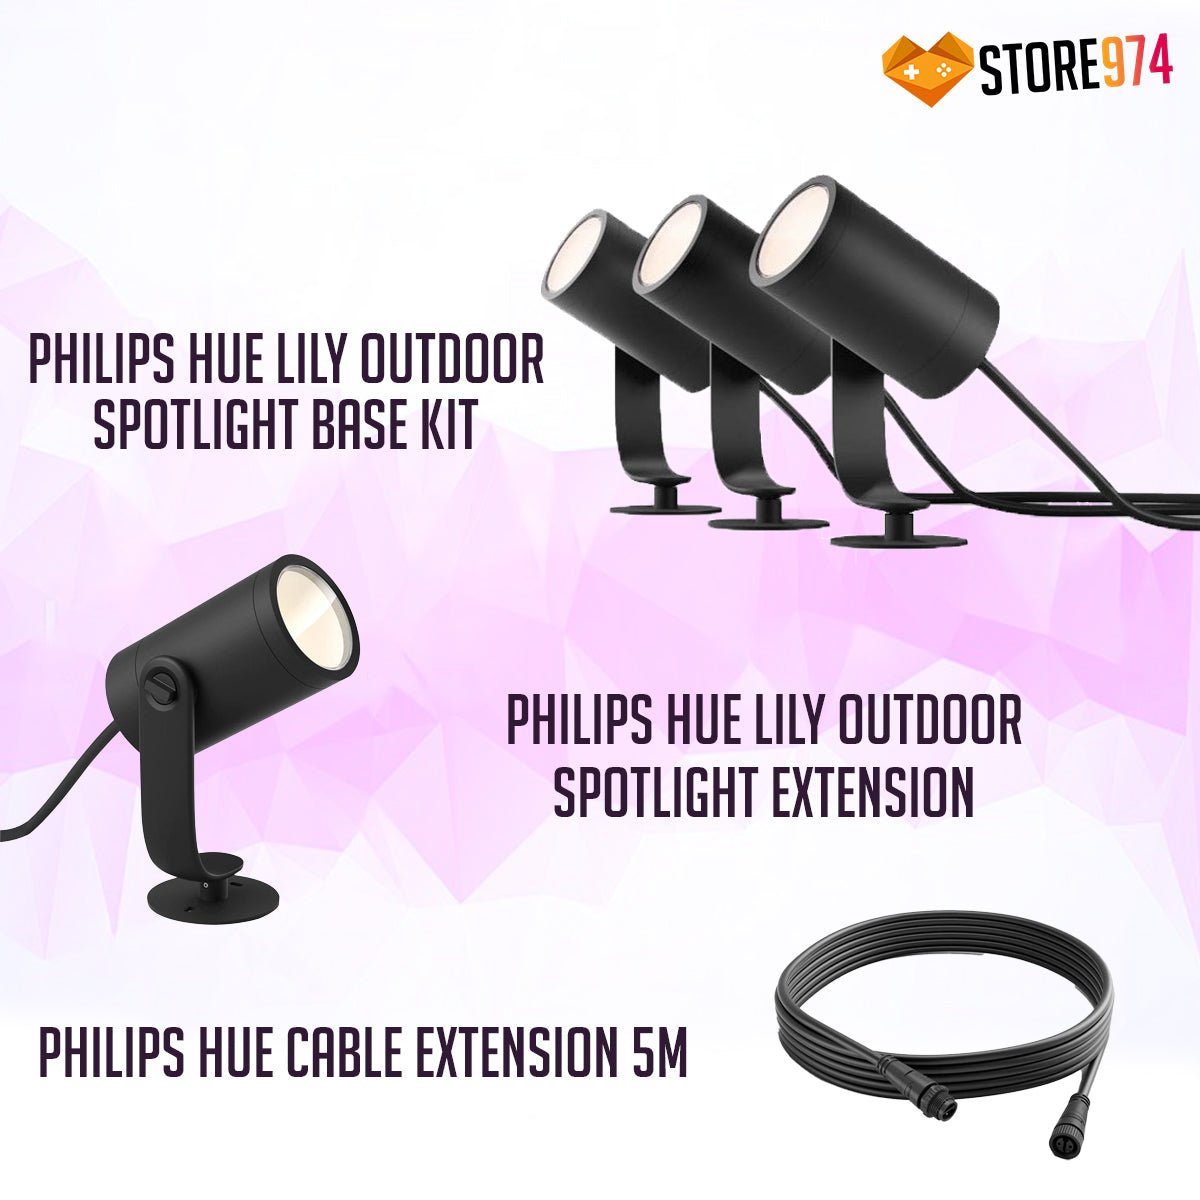 Philips HUE Lily Outdoor Spotlight Base Kit + Lily Outdoor Spotlight Extension + Cable Extension 5m - Store 974 | ستور ٩٧٤